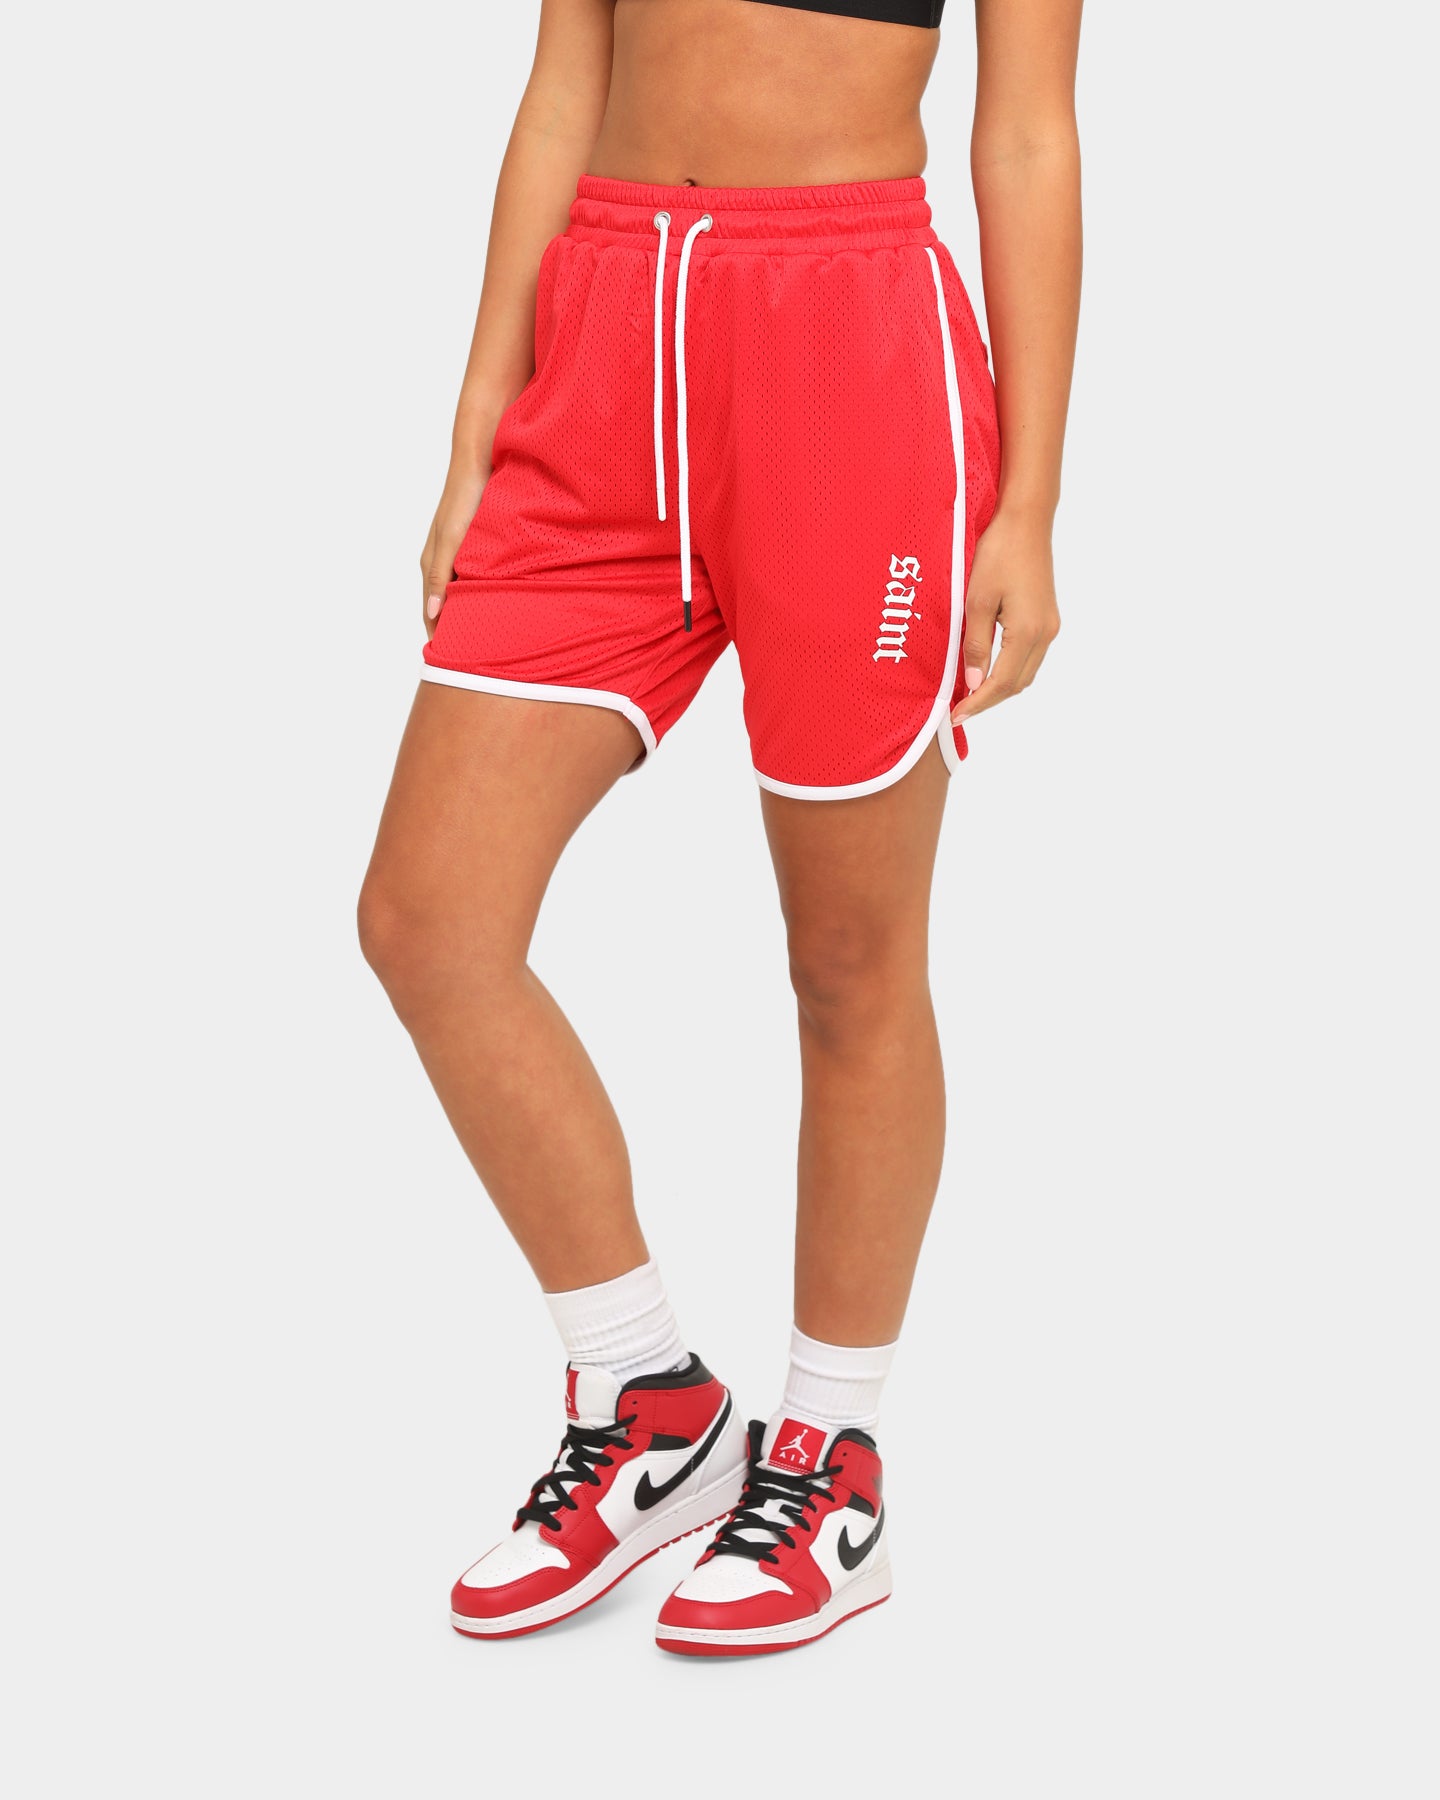 womens red basketball shorts